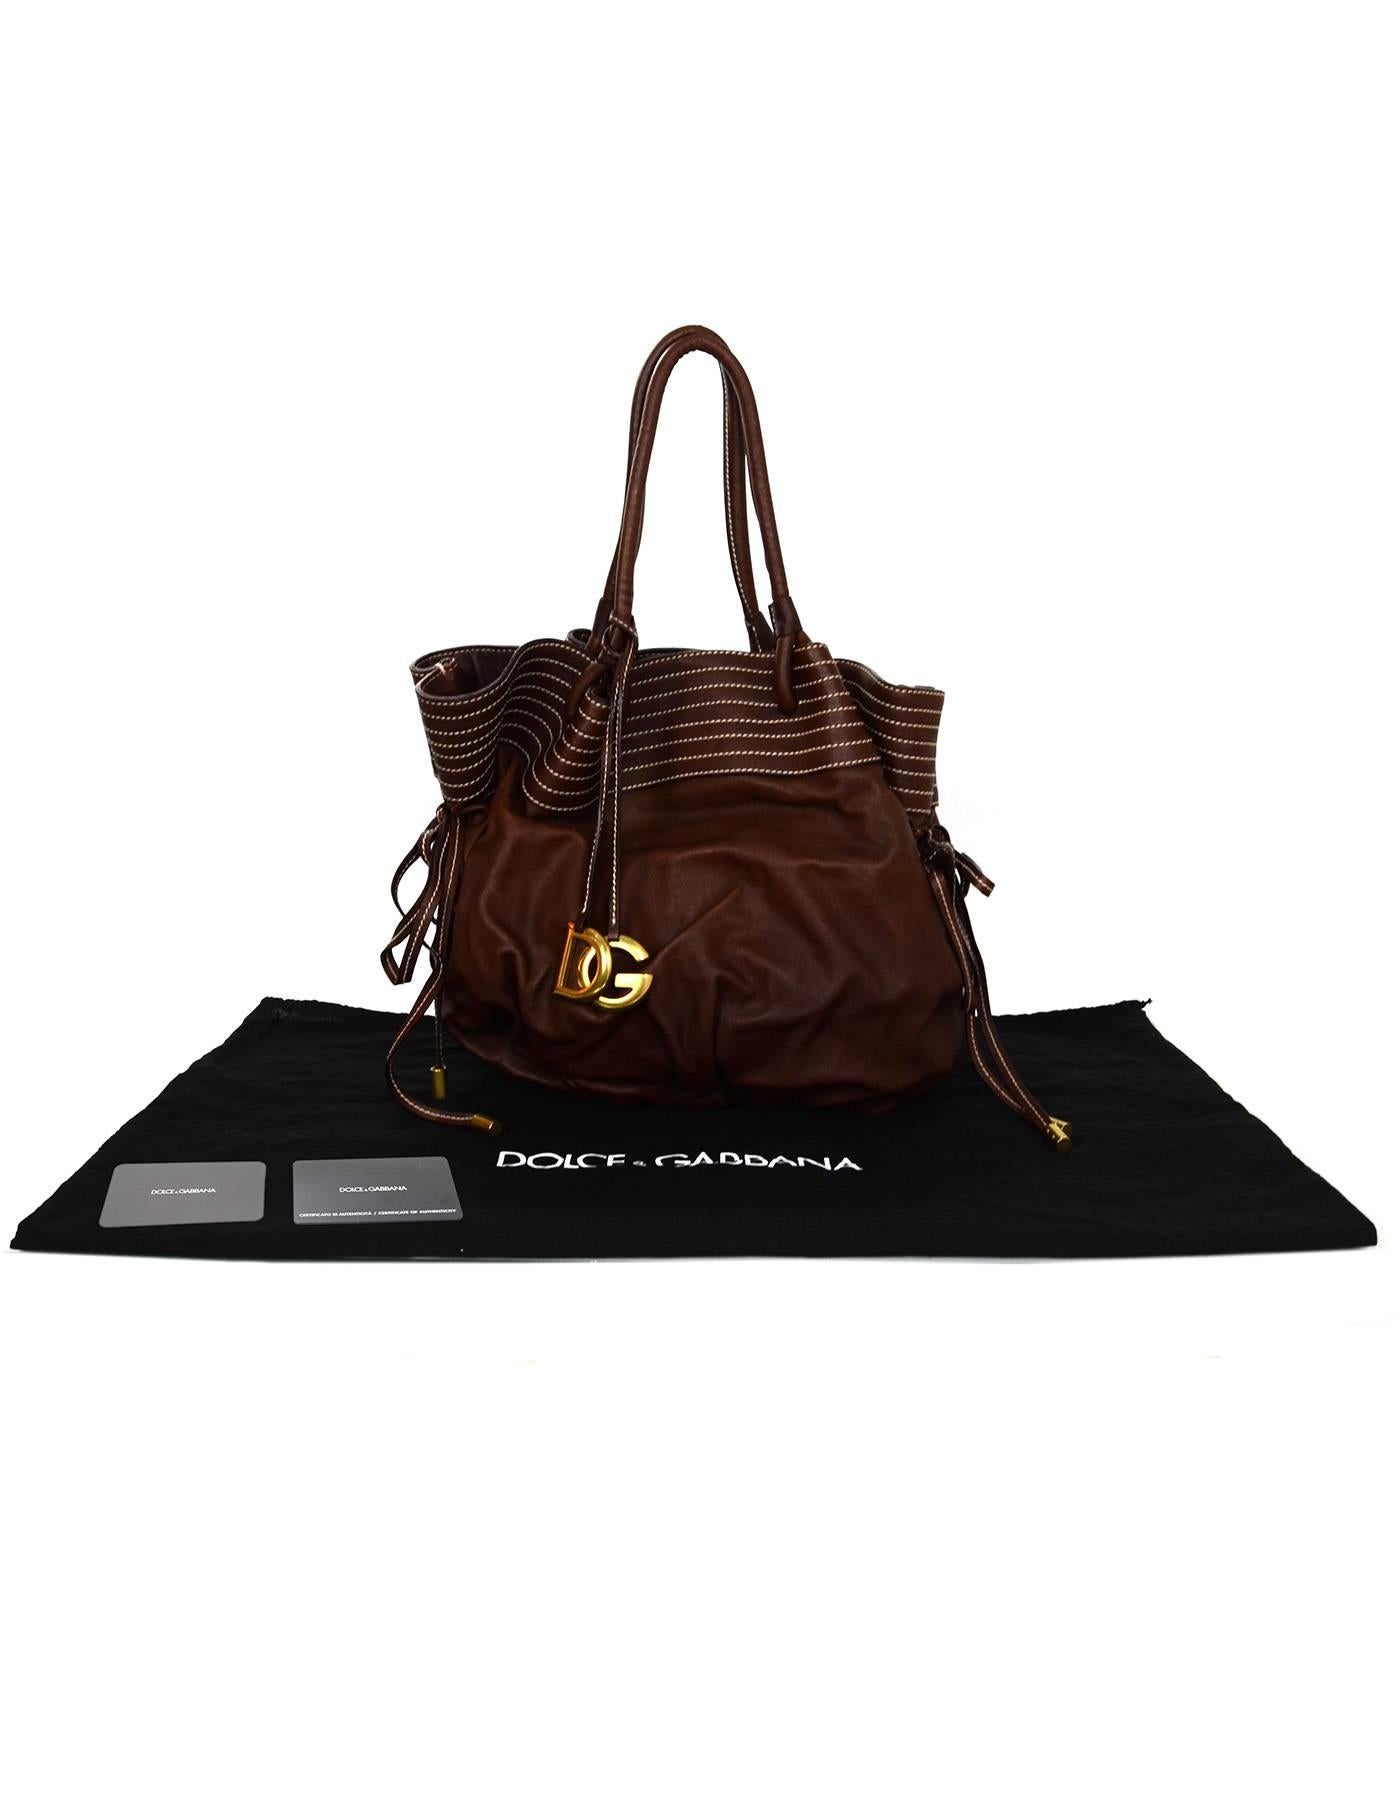 Dolce & Gabbana NEW Brown Leather Drawstring Bag rt. $1, 450 3